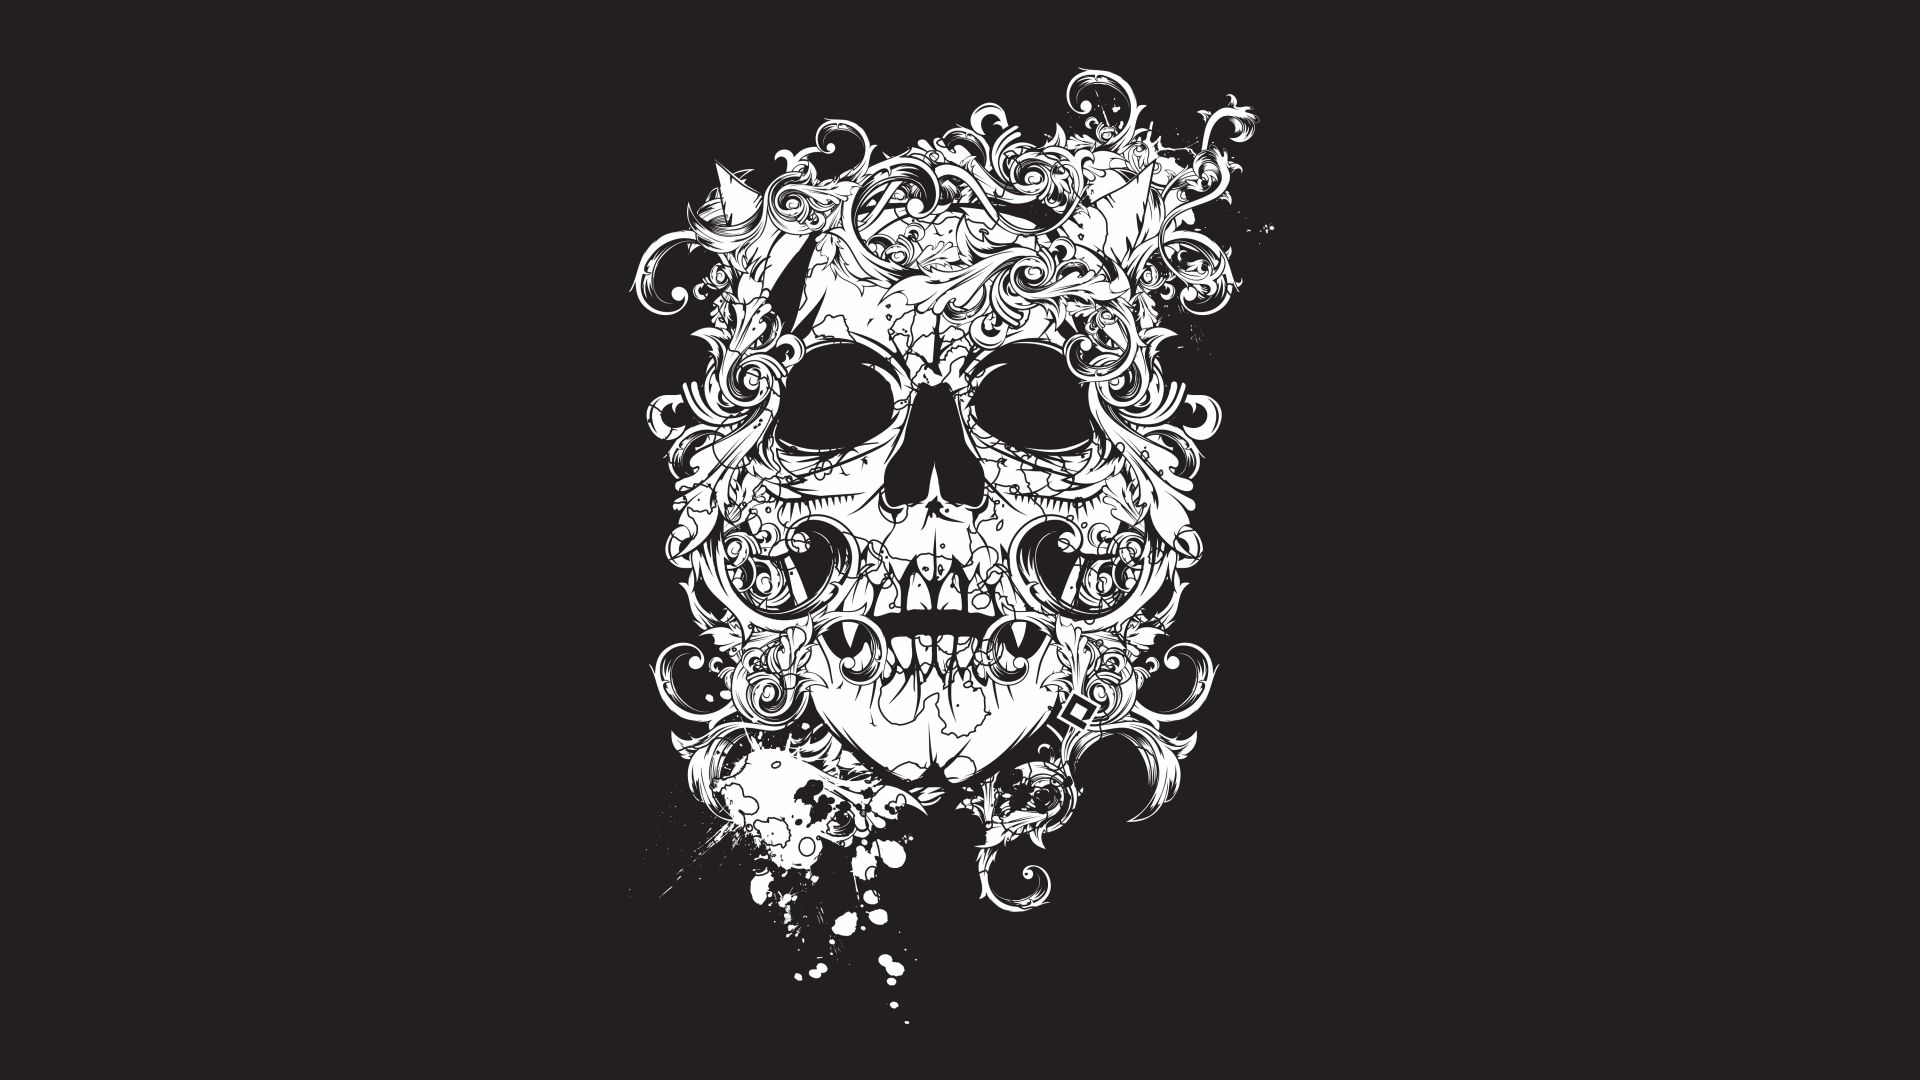 Desktop wallpaper skull tattoo hd image picture background cnuyu